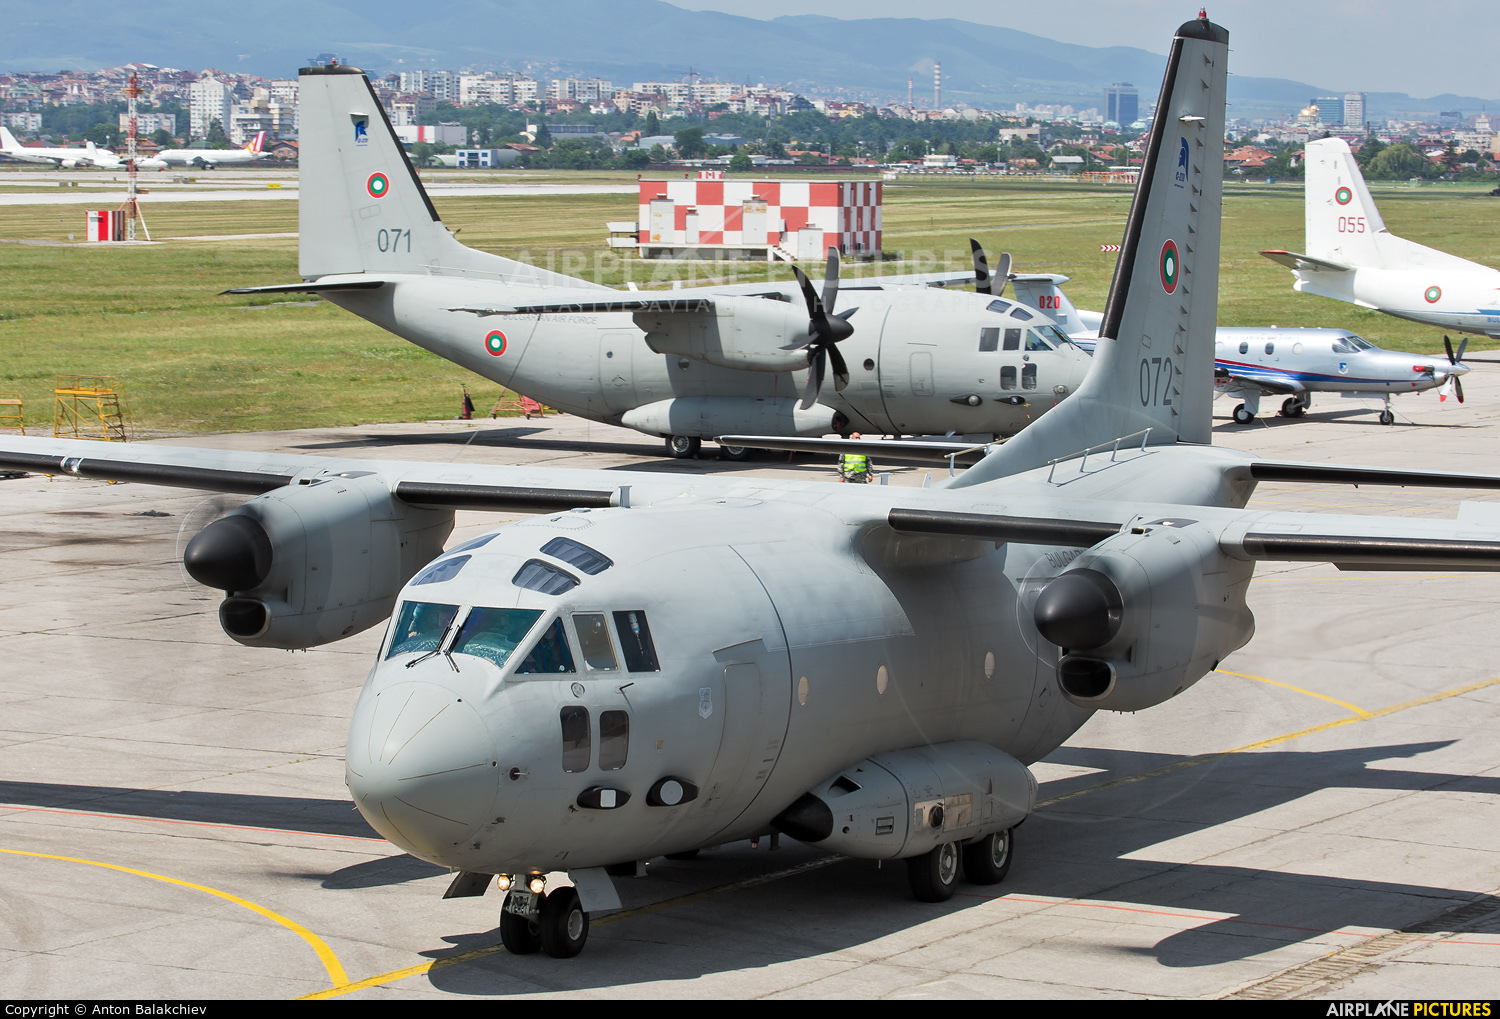 Bulgaria - Air Force 072 aircraft at Sofia